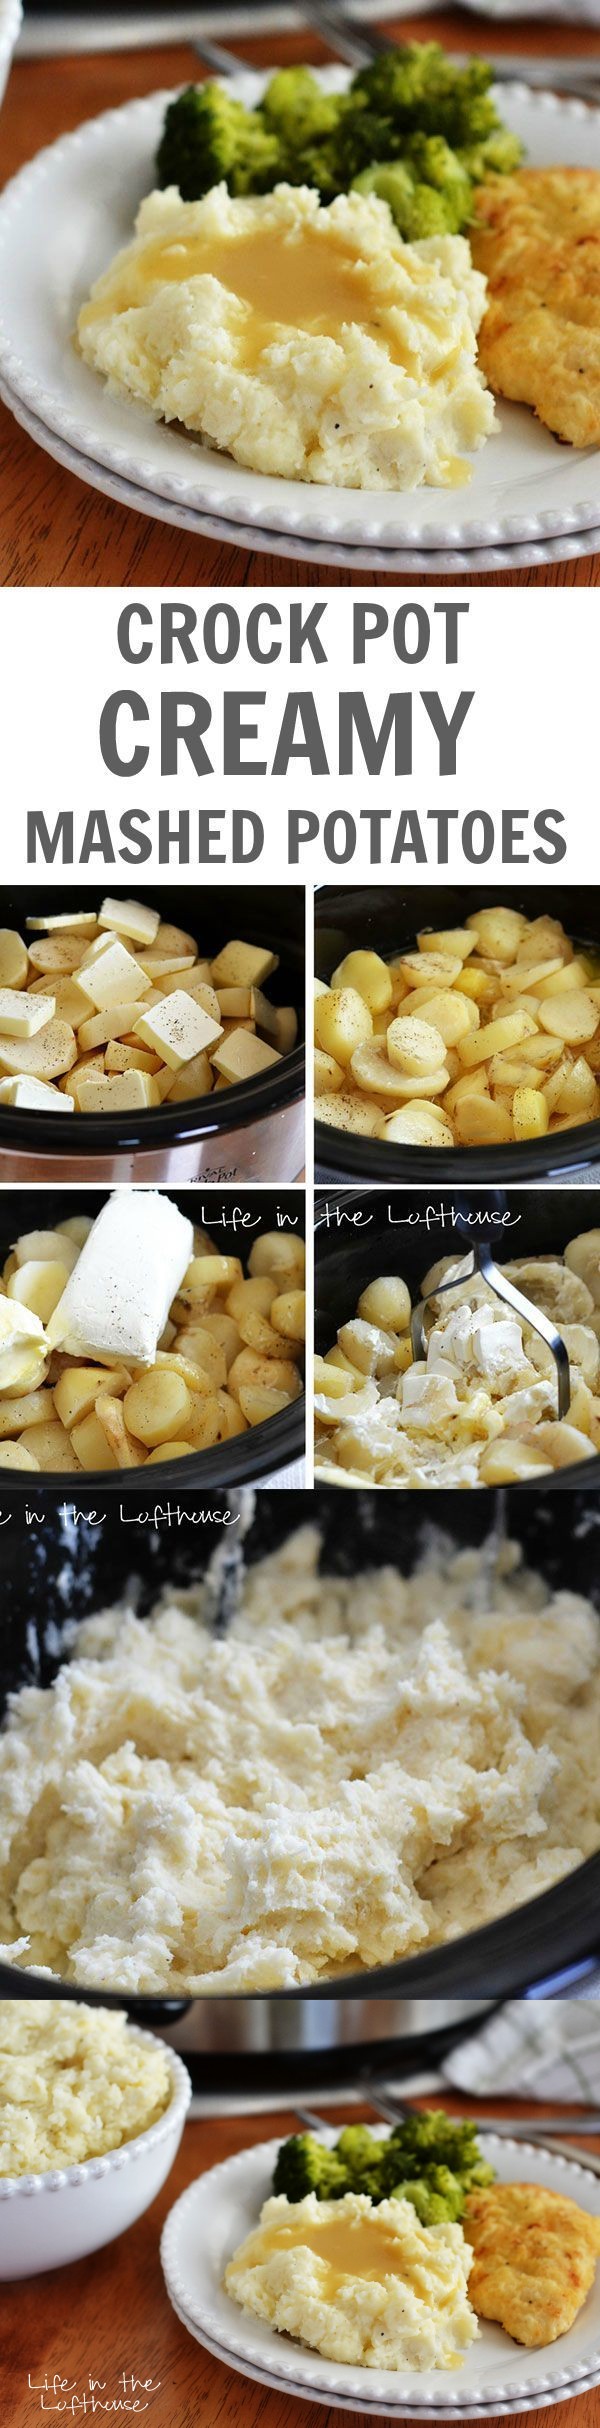 Crock Pot Creamy Mashed Potatoes